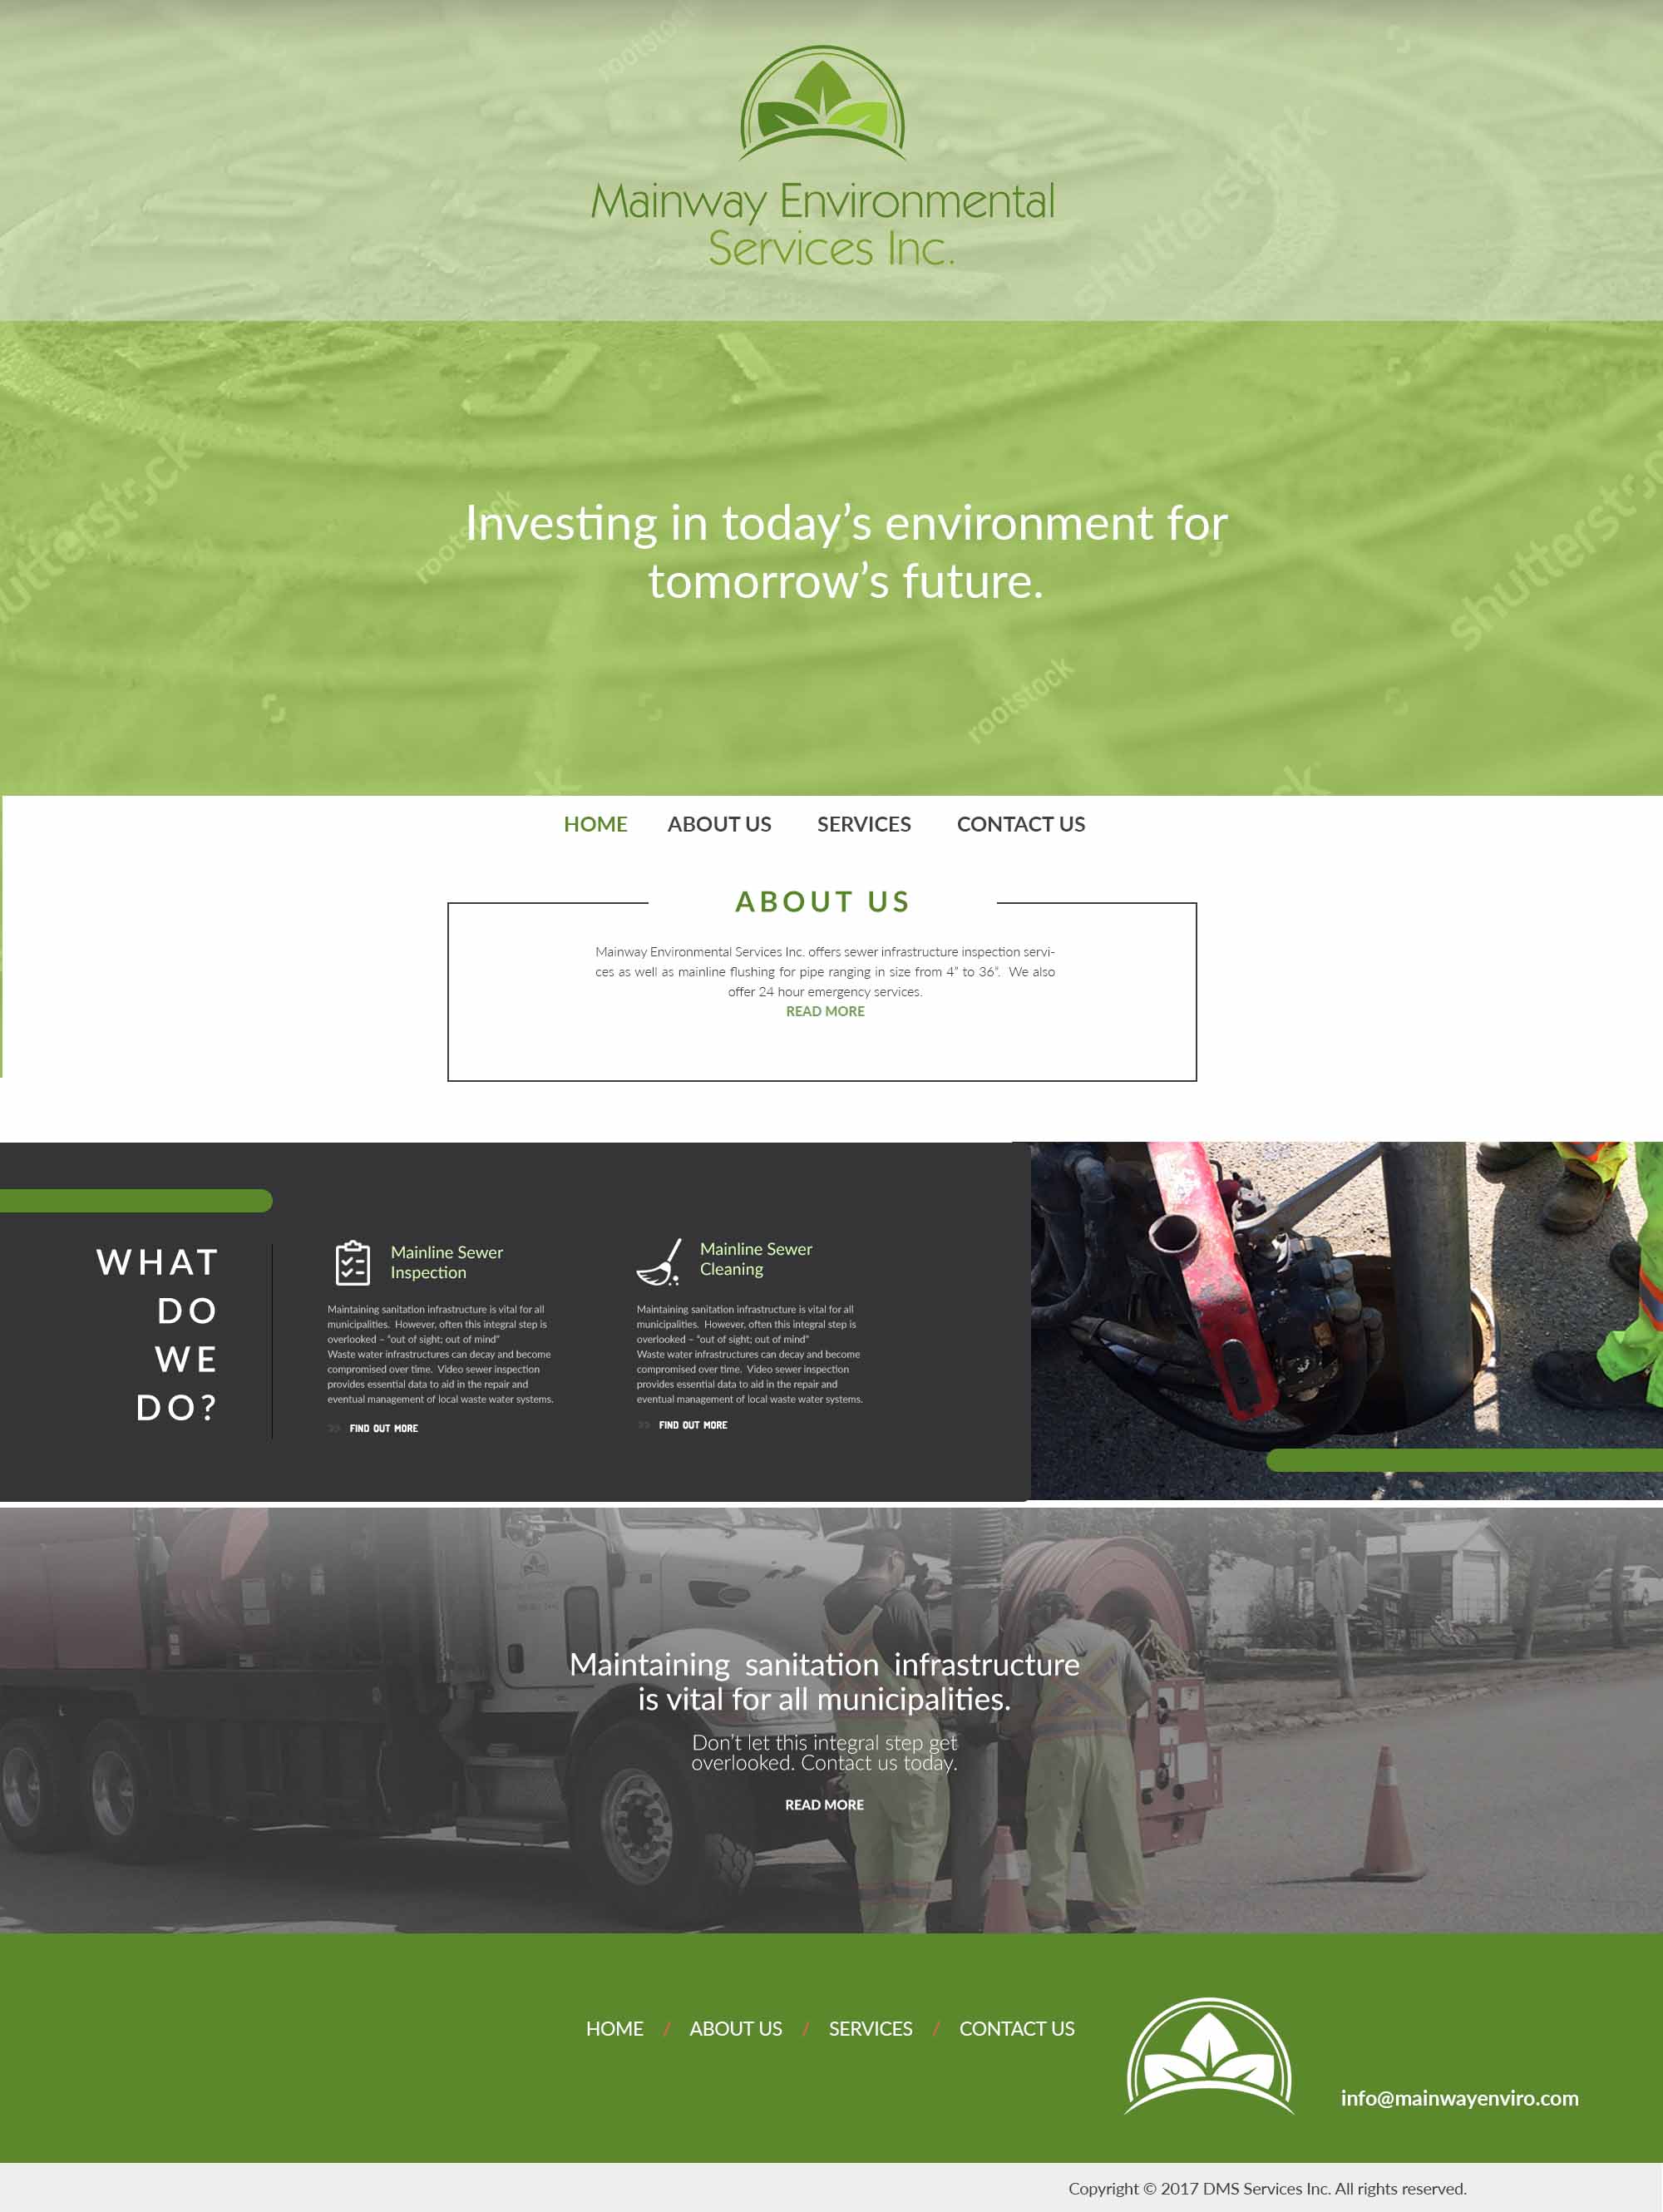 DMS Services Website Portfolio - Mainway Environmental Services Inc.